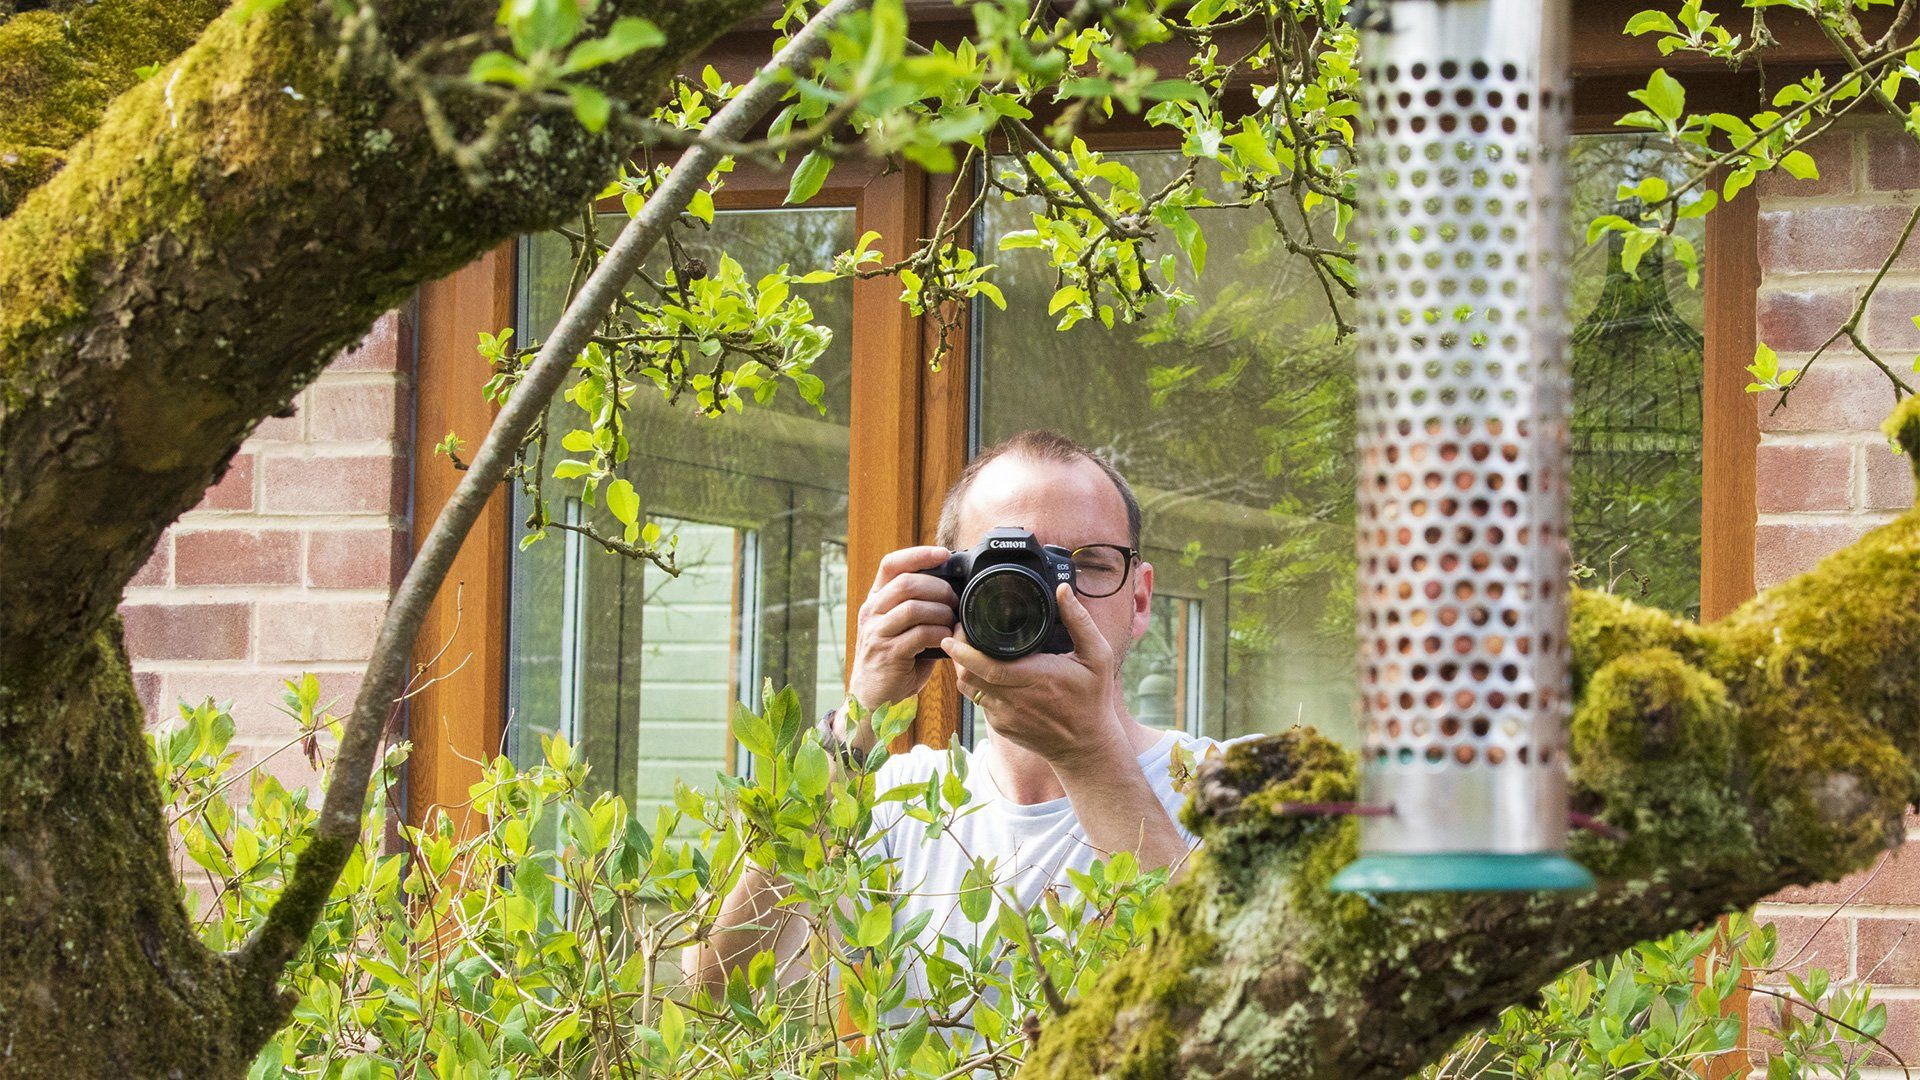 James Paterson photographing a bird feeder in his garden.